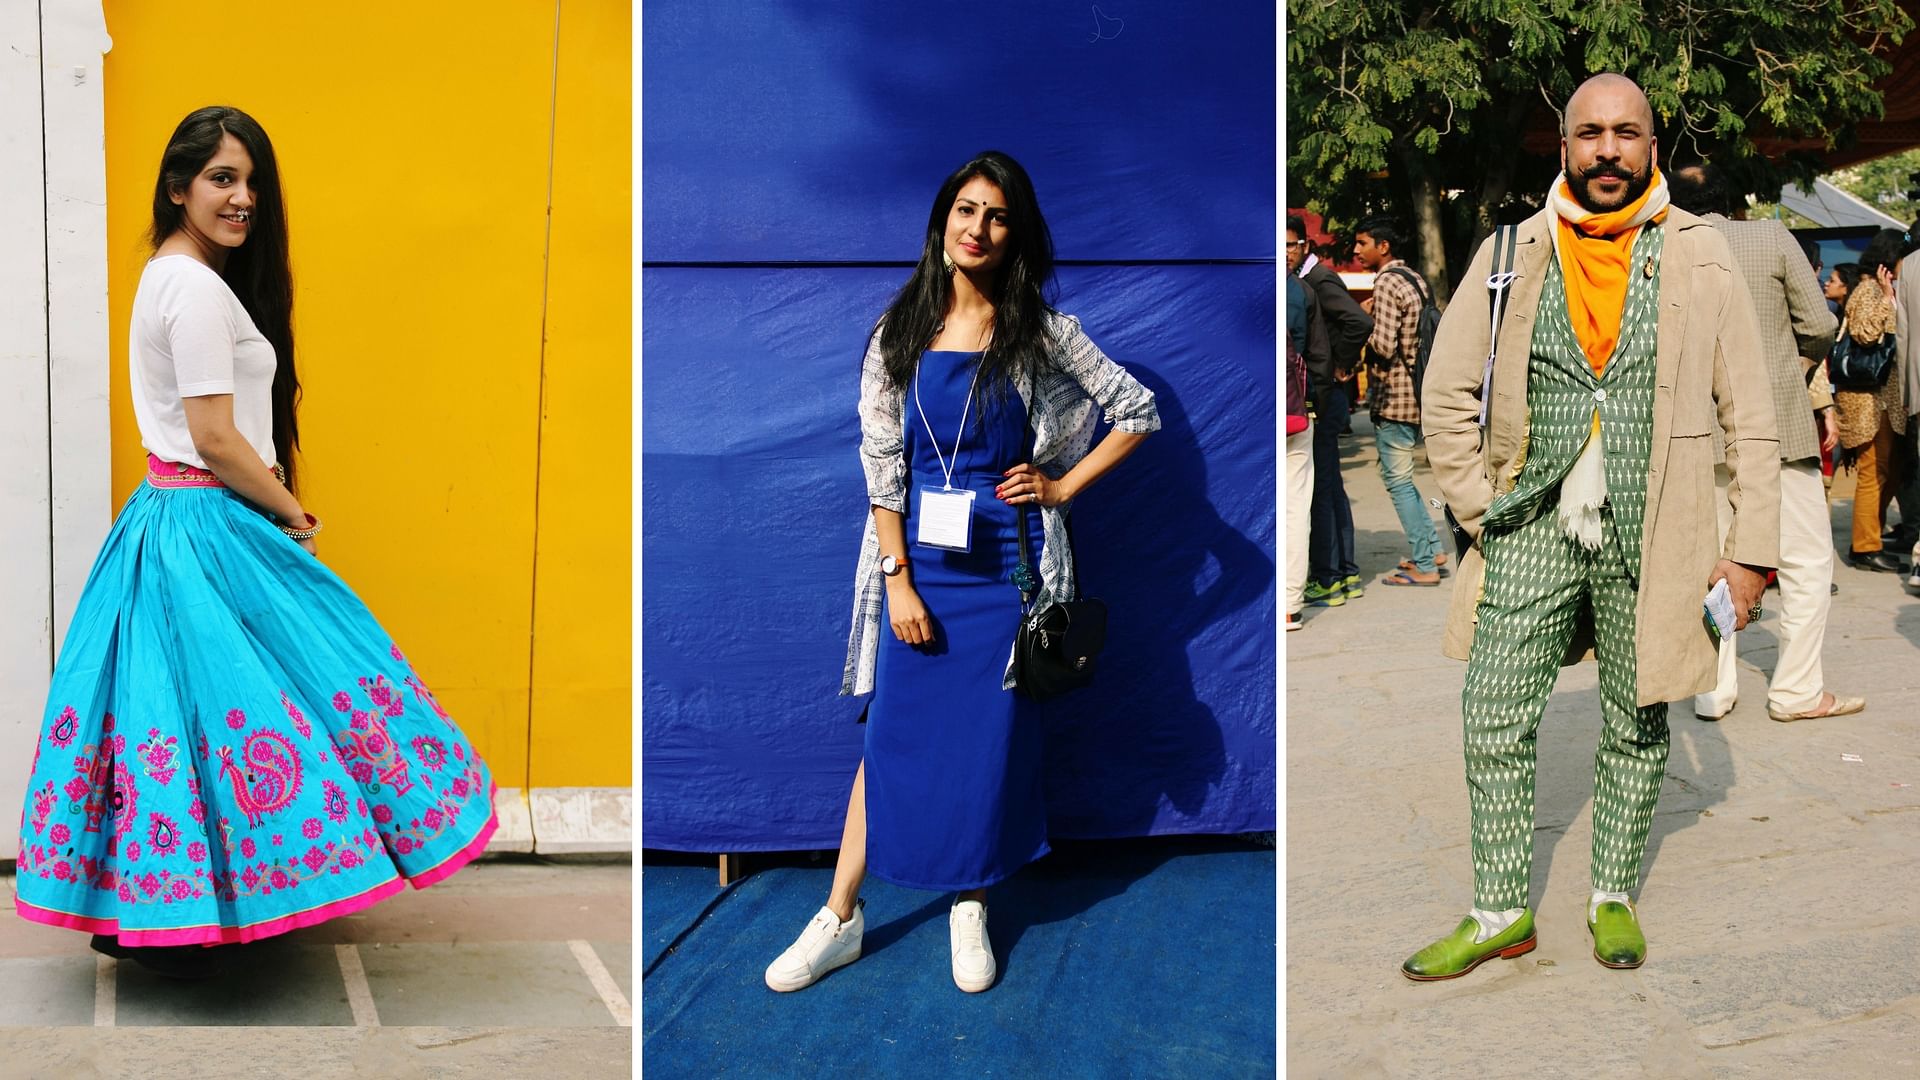 Fashion meets literature at Jaipur Literature Festival. (Photo: Abhimanyu Rathore)